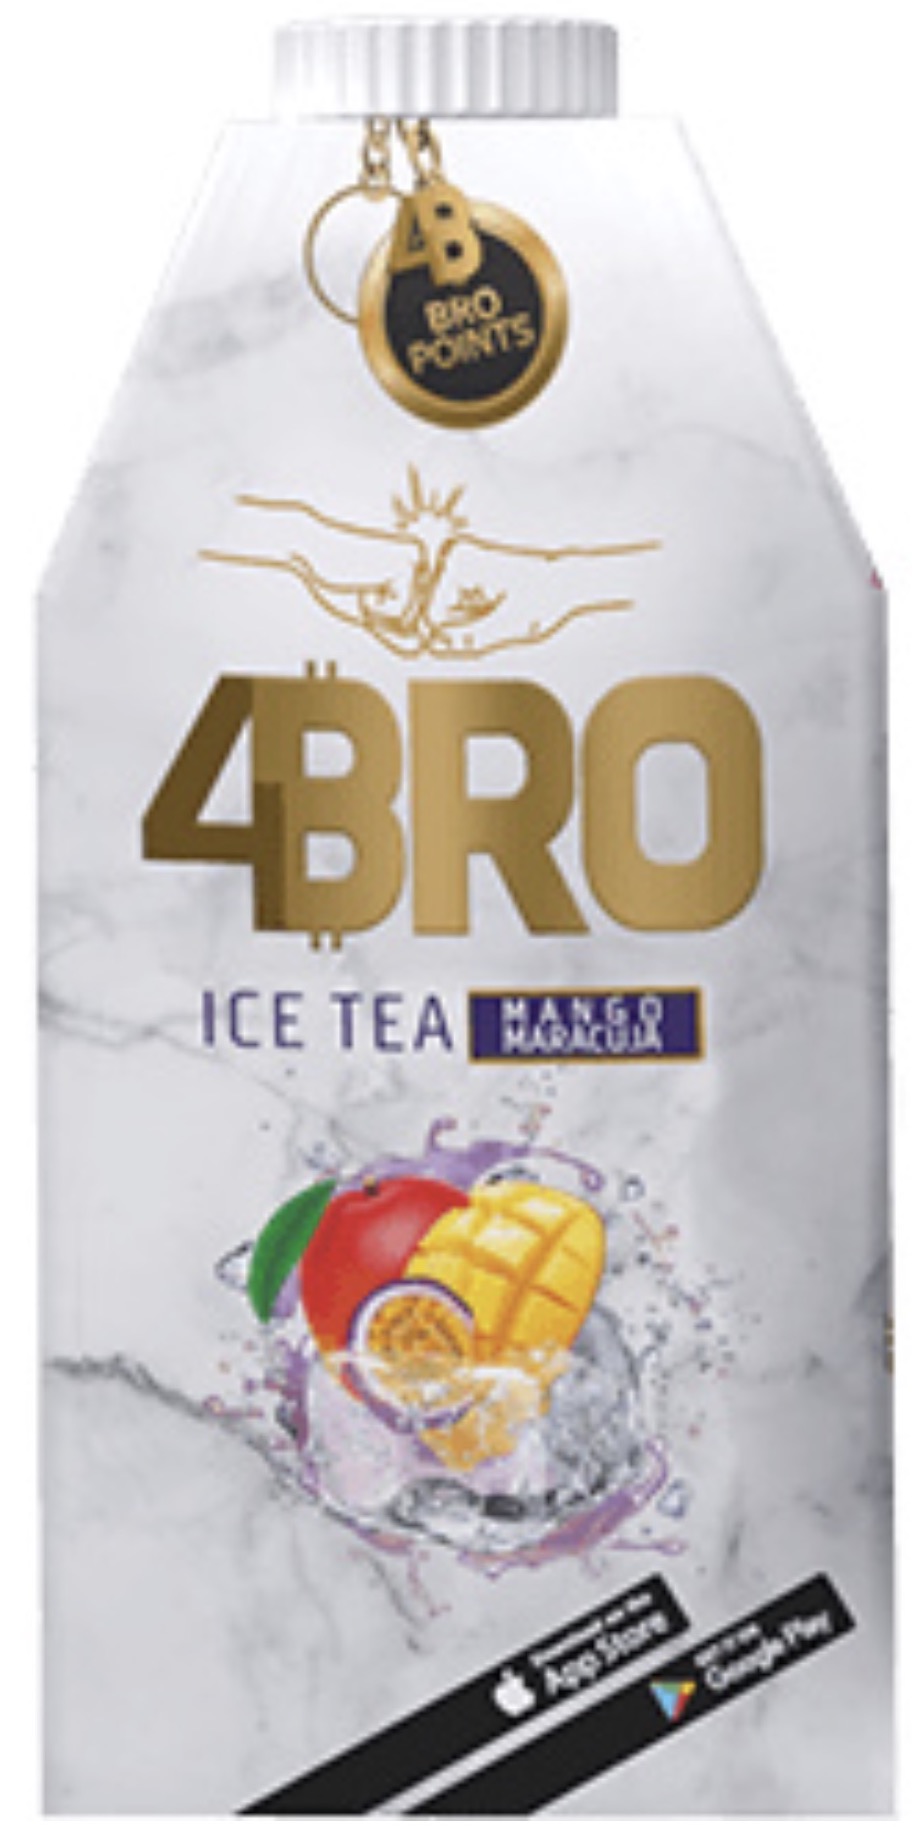 4Bro - Ice Tea Mago-Maracuja 0,5L